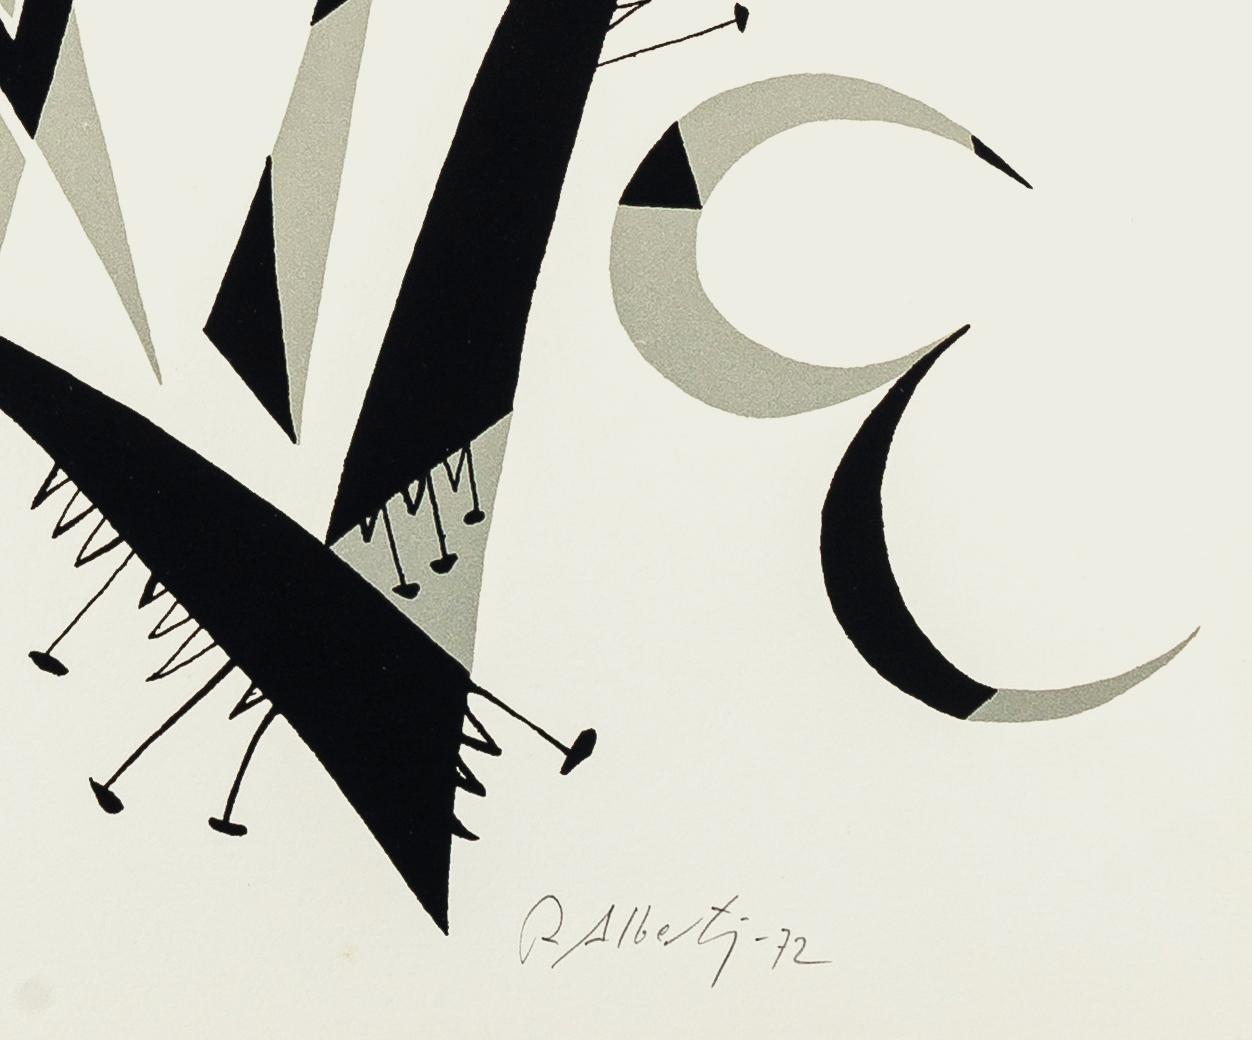 Letter V - Original Lithograph by Raphael Alberti - 1972 - Abstract Print by Rafael Alberti